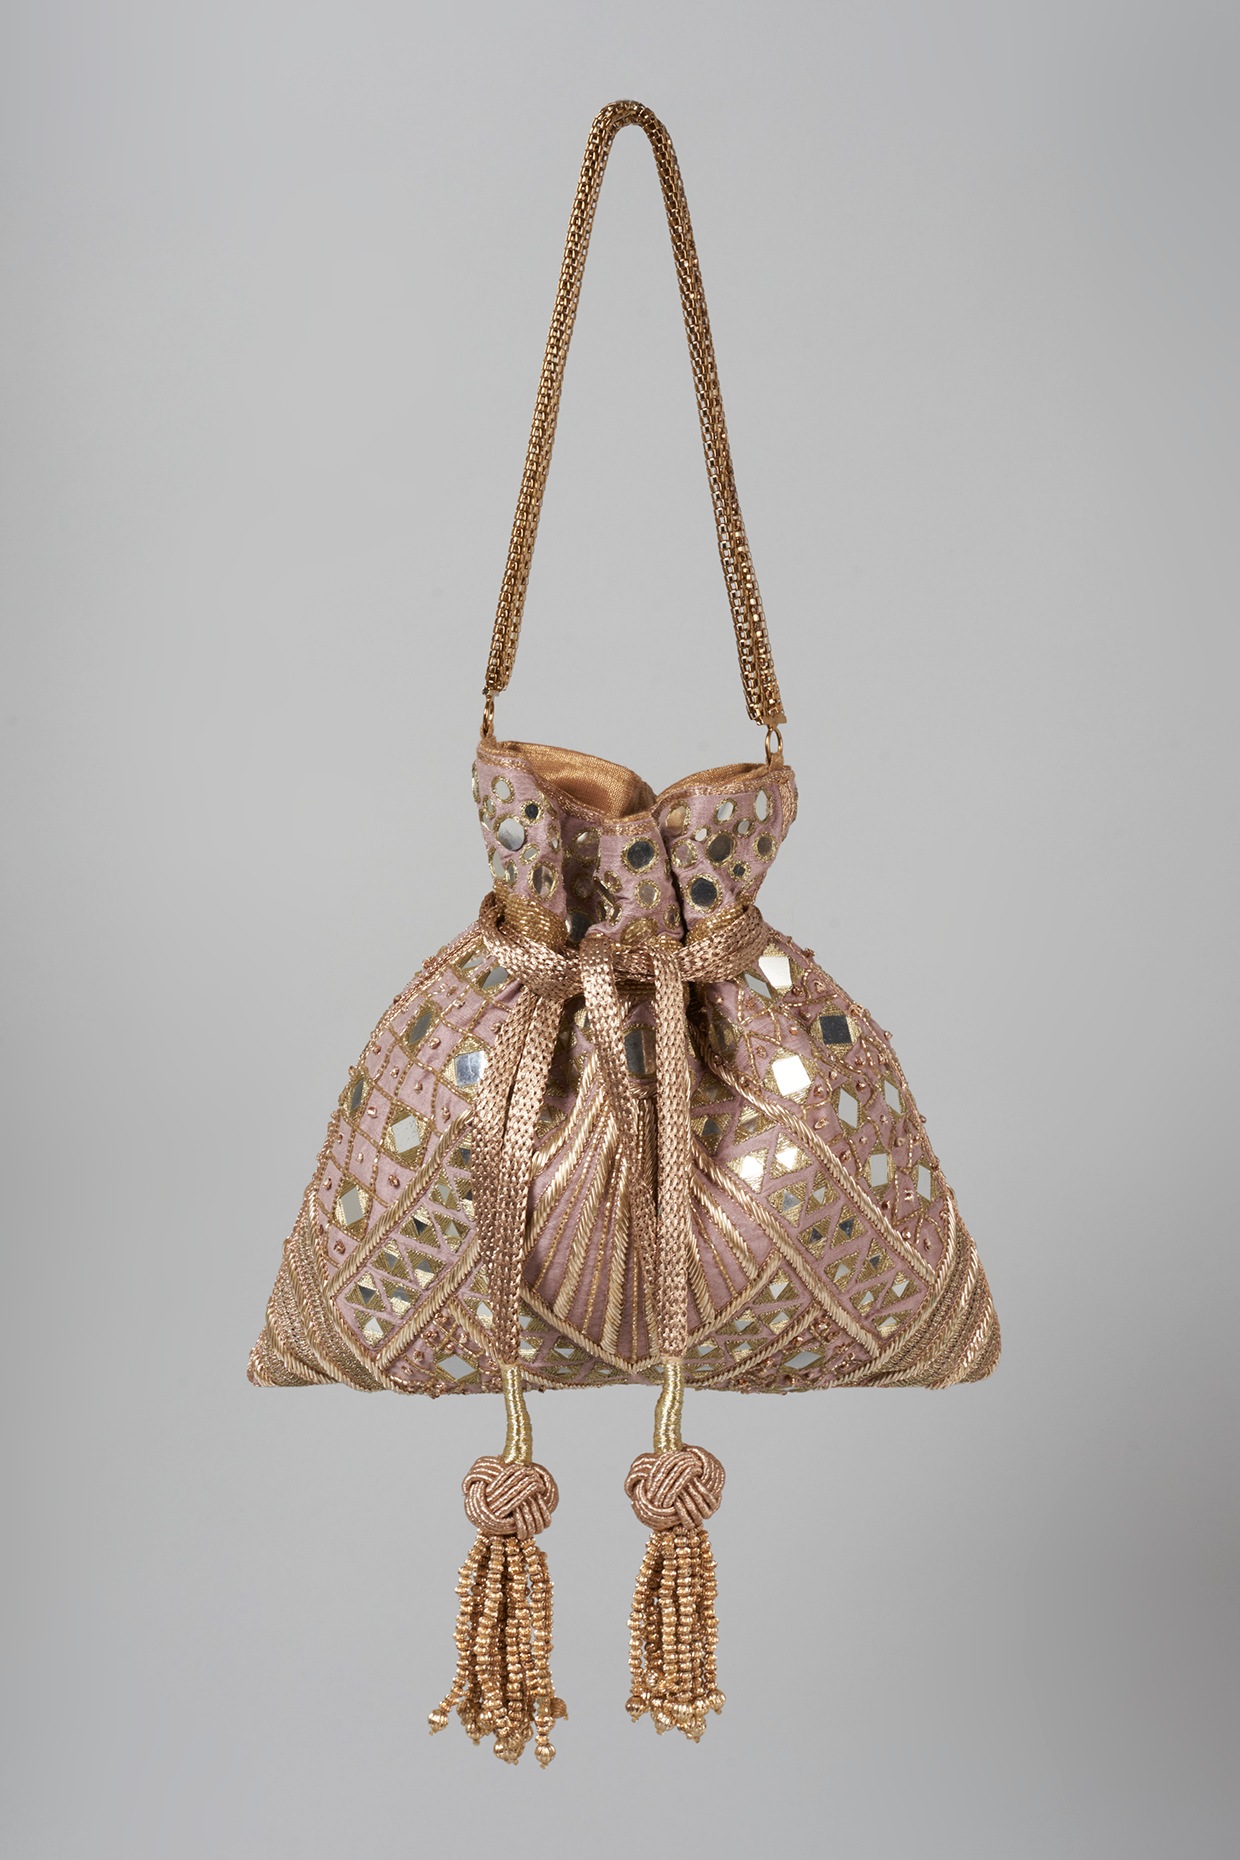 Buy INAAYA - Bridal Accessories Potli Batwa Satin Evening Bag ladies purse  handbags for women (Antique Gold) at Amazon.in